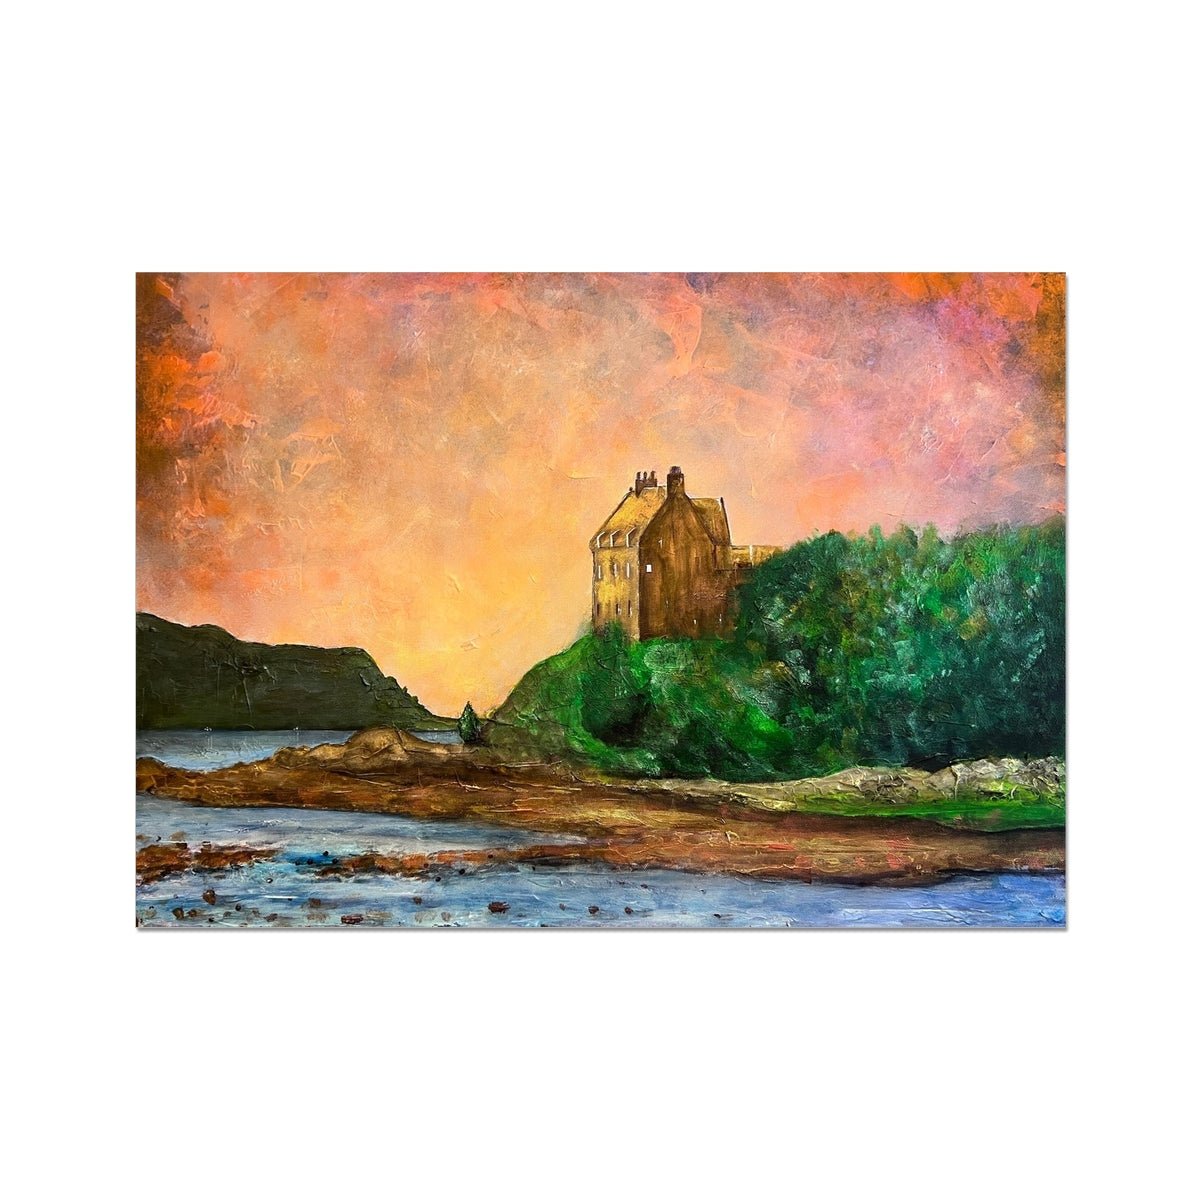 Duntrune Castle Painting | Fine Art Prints From Scotland-Unframed Prints-Scottish Castles Art Gallery-A2 Landscape-Paintings, Prints, Homeware, Art Gifts From Scotland By Scottish Artist Kevin Hunter